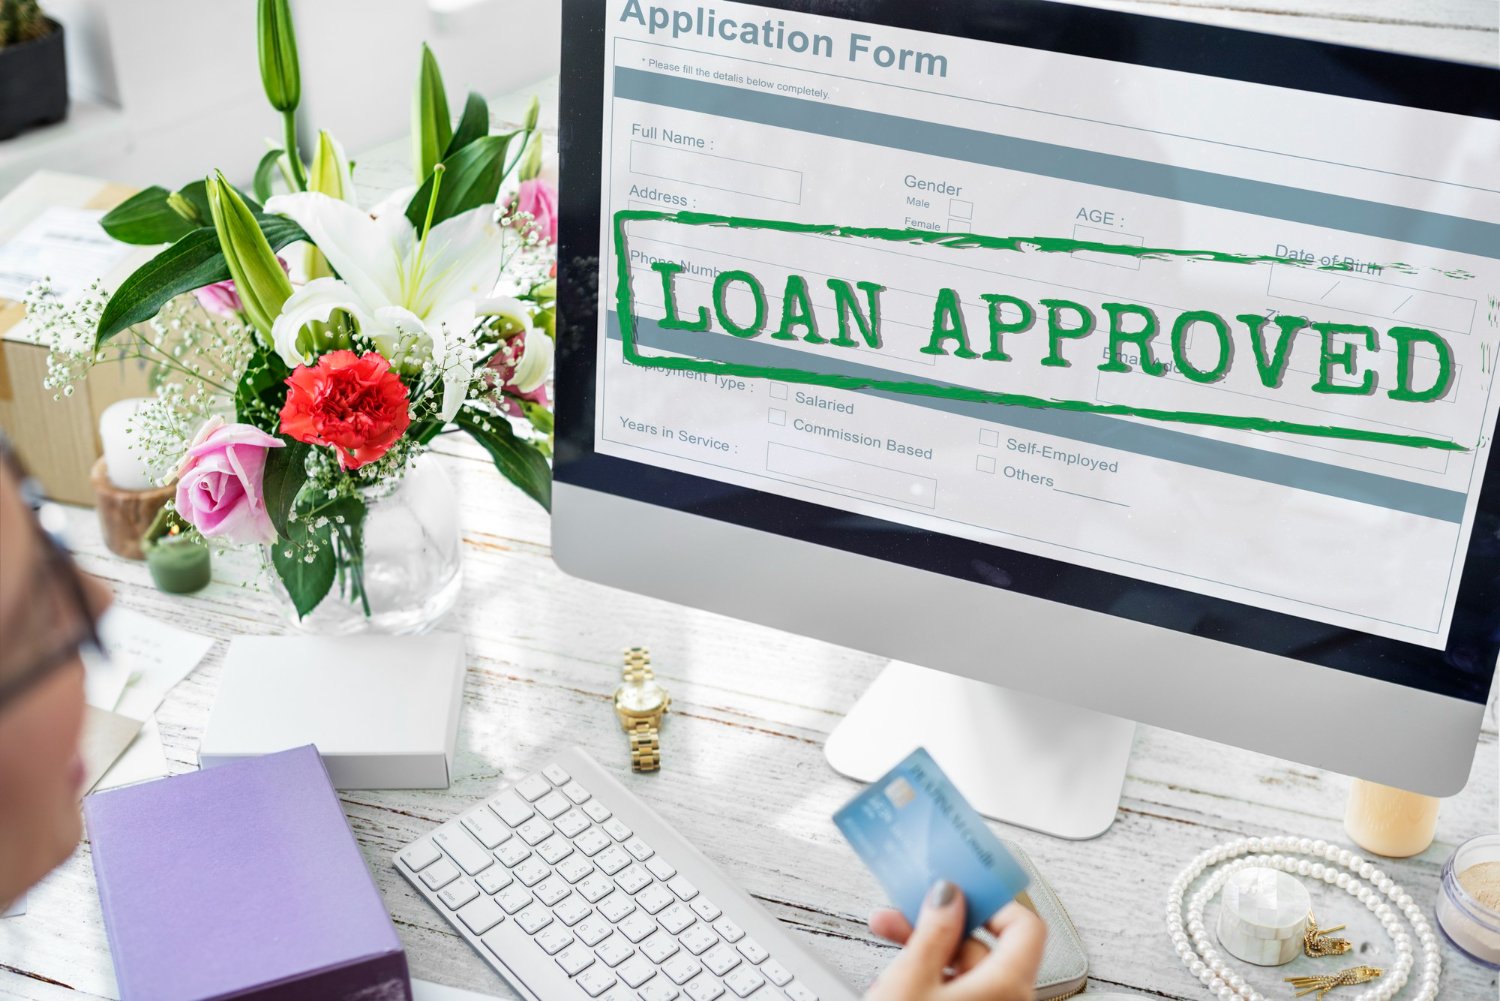 Personal Loan Despite a Low Credit Score